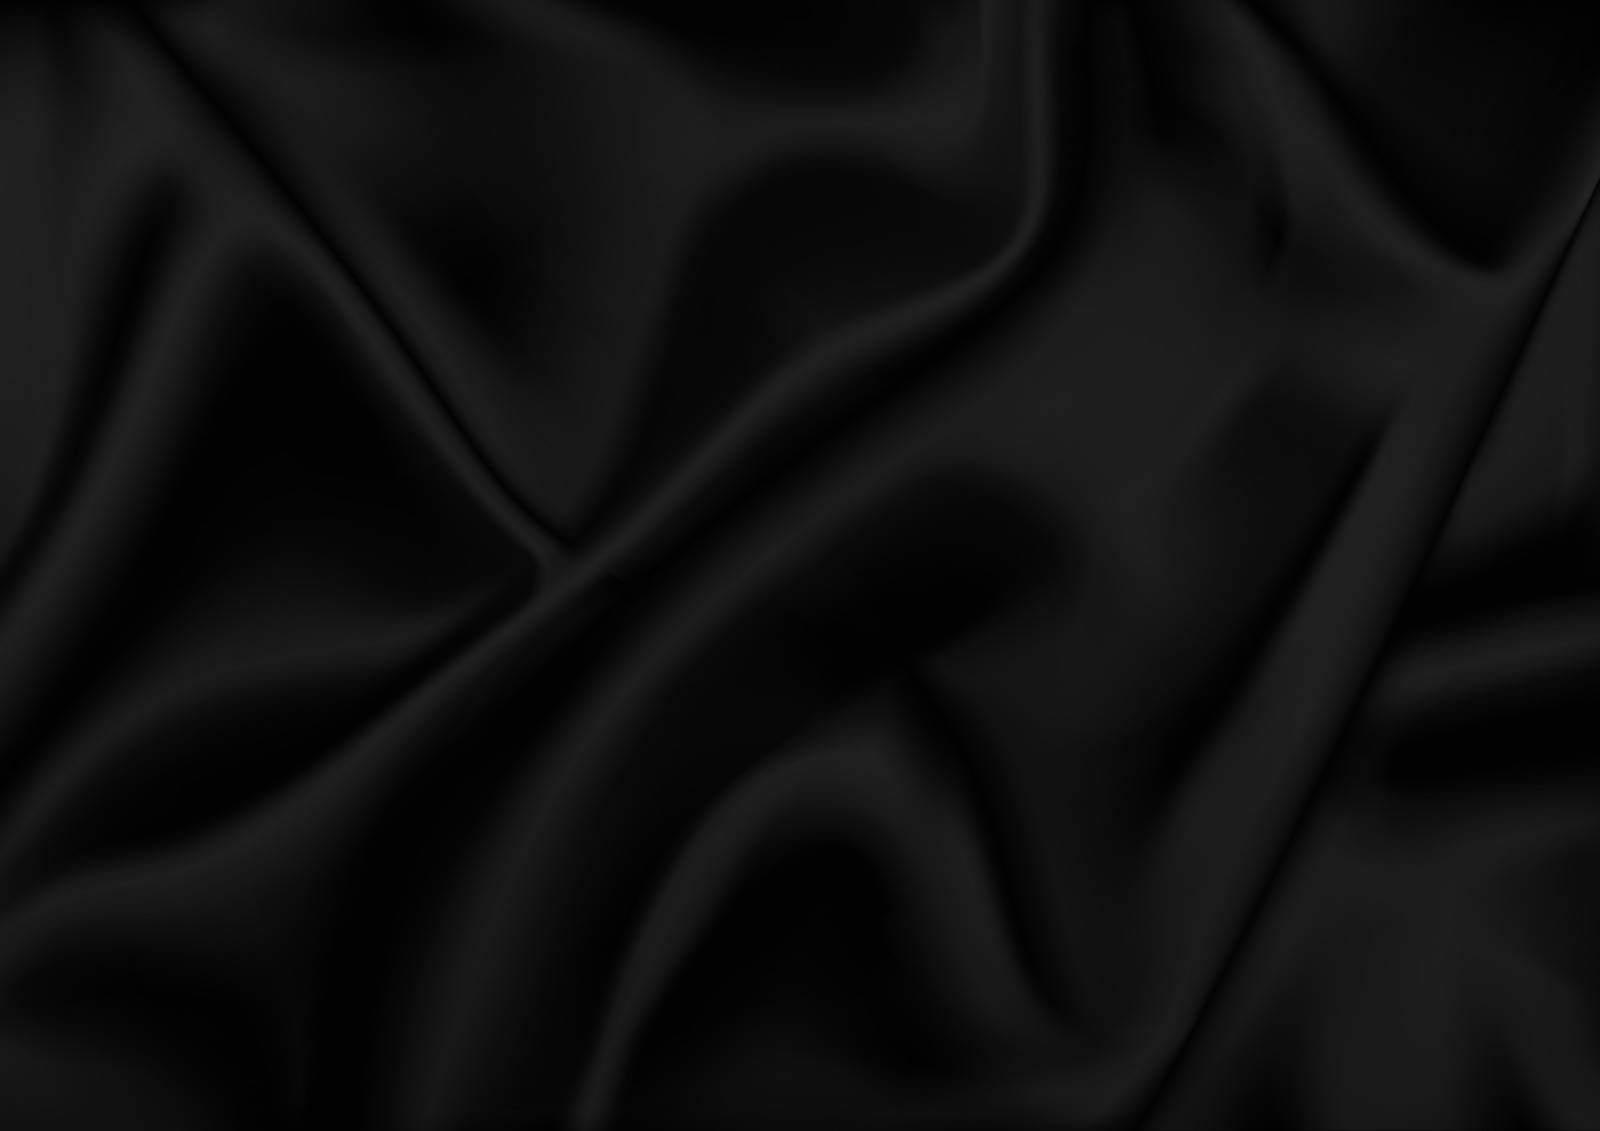 Black Satin Background by illustratorCZ